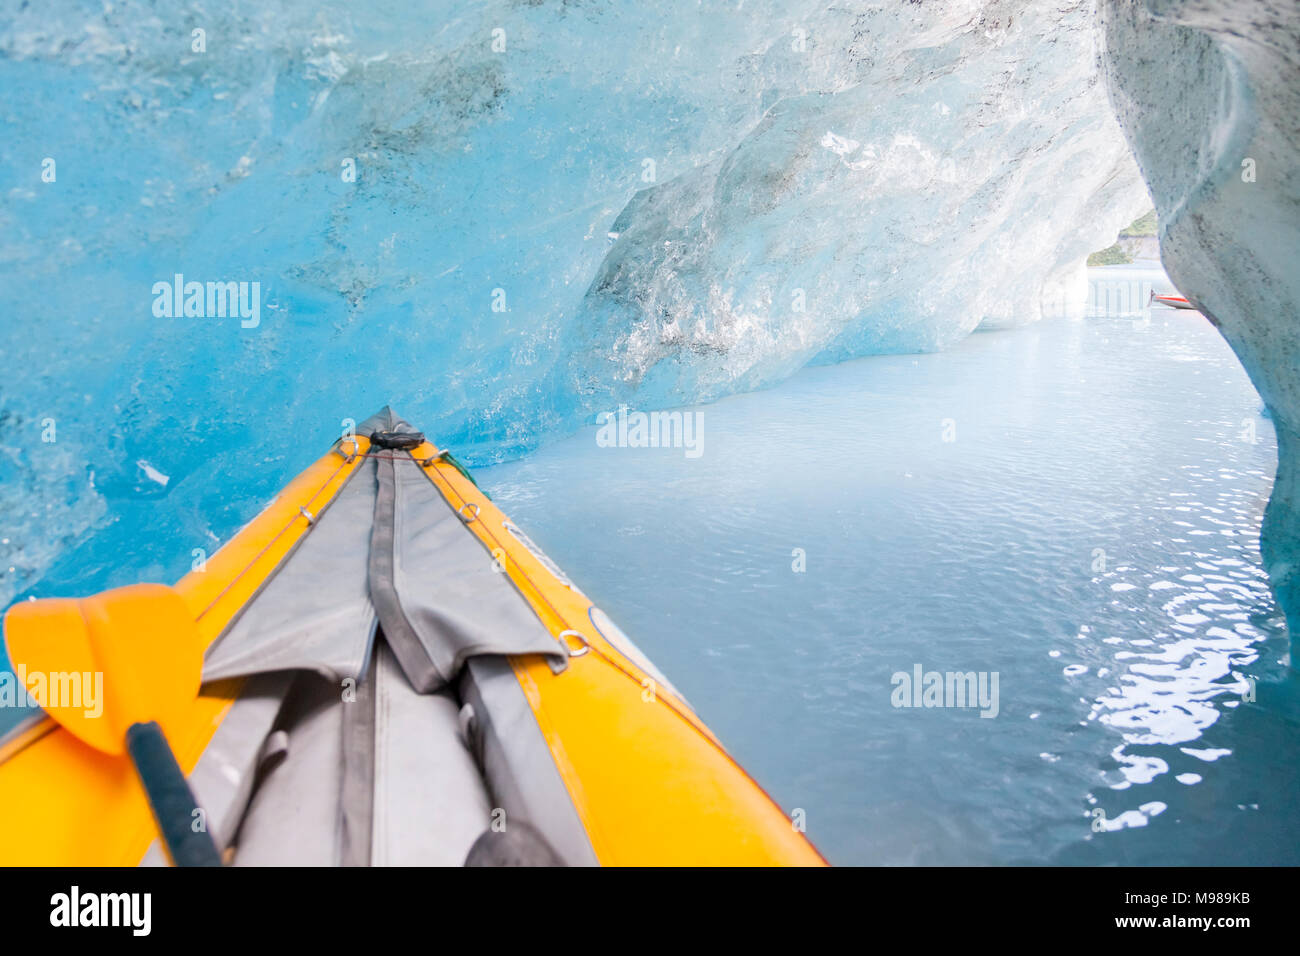 USA, Alaska, Valdez-Glacier, kajak dans la caverne de glace Banque D'Images